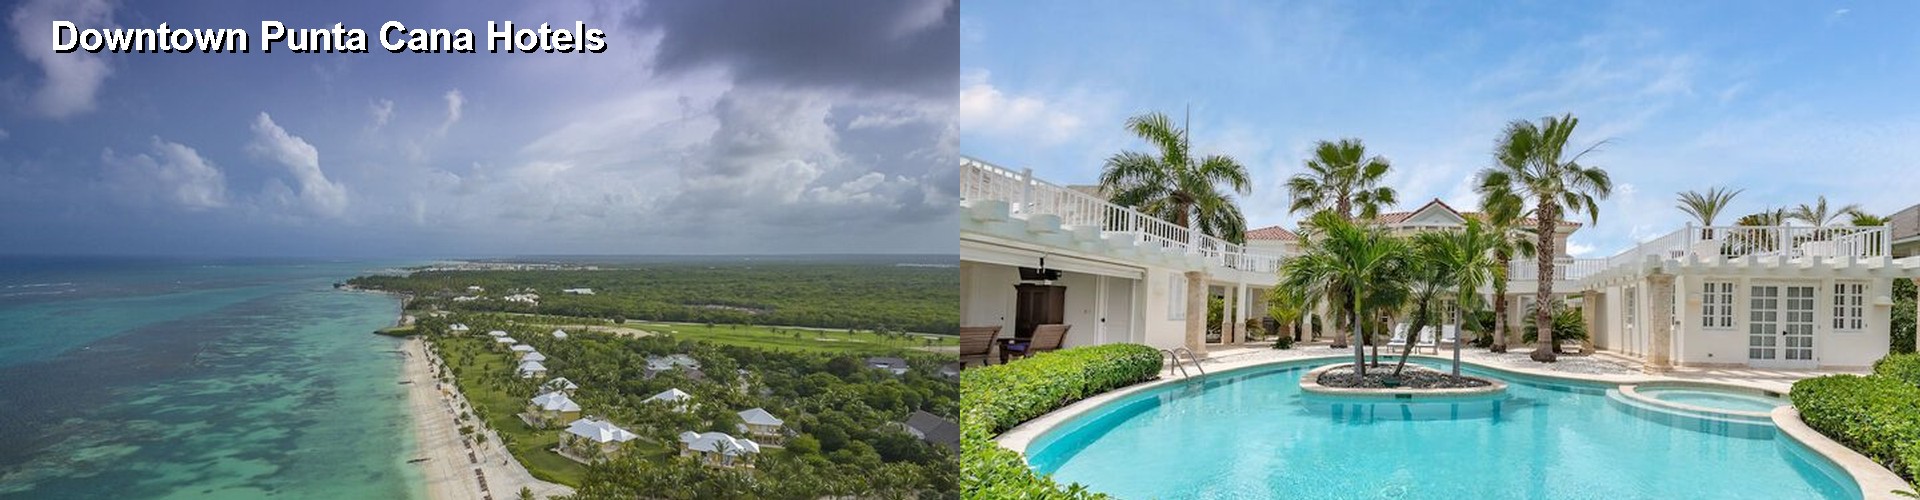 5 Best Hotels near Downtown Punta Cana